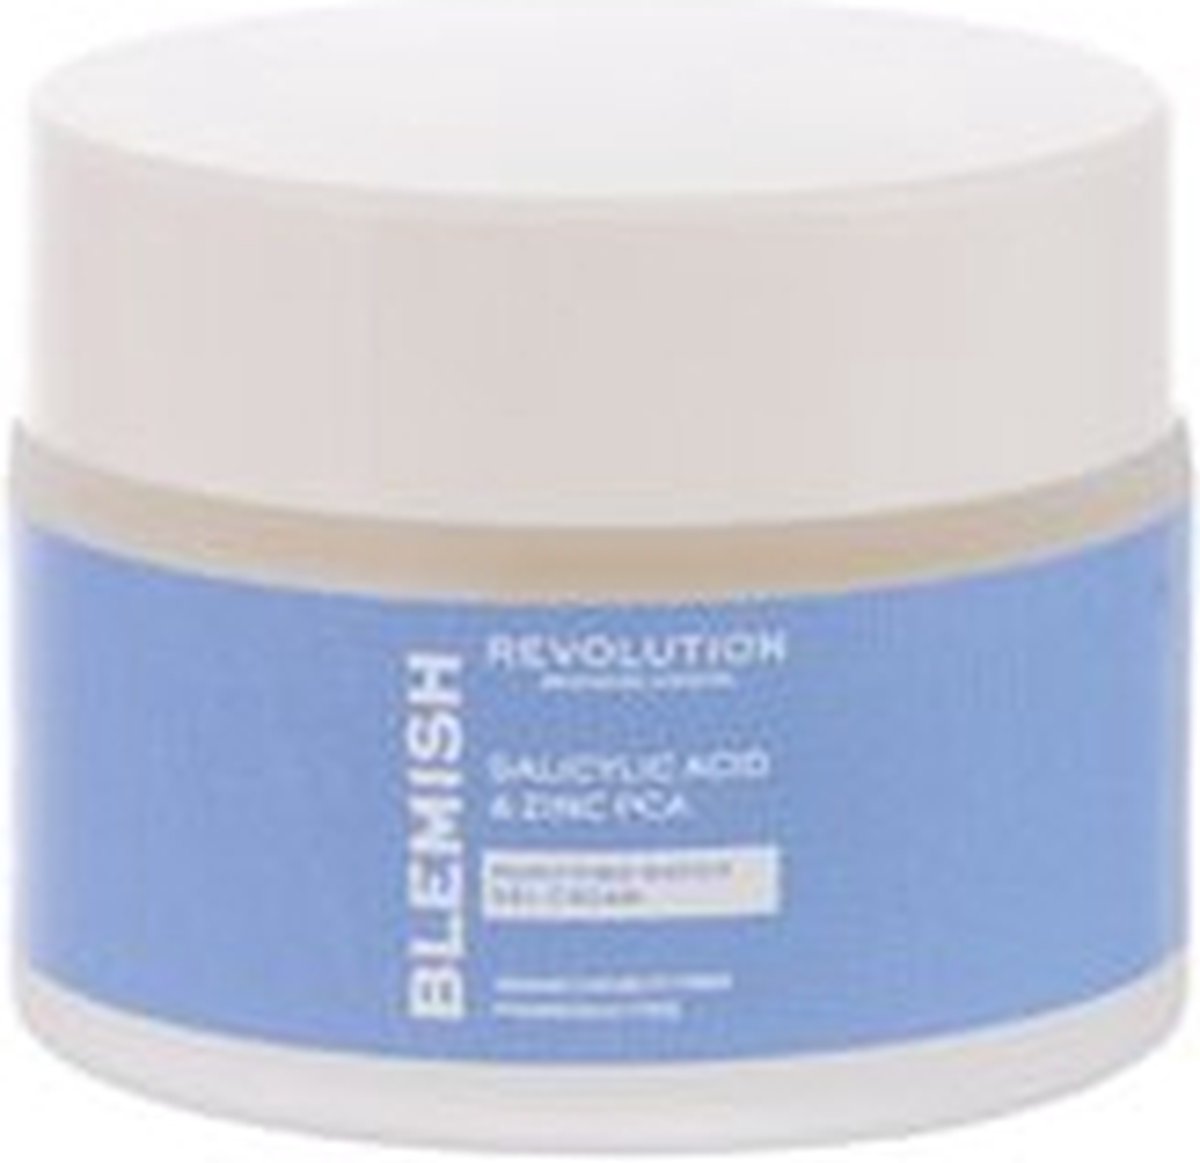 Blemish Salicylic Acid & Zinc Pca Purifying Water Gel Cream - Skin Gel For Problematic Skin 50ml